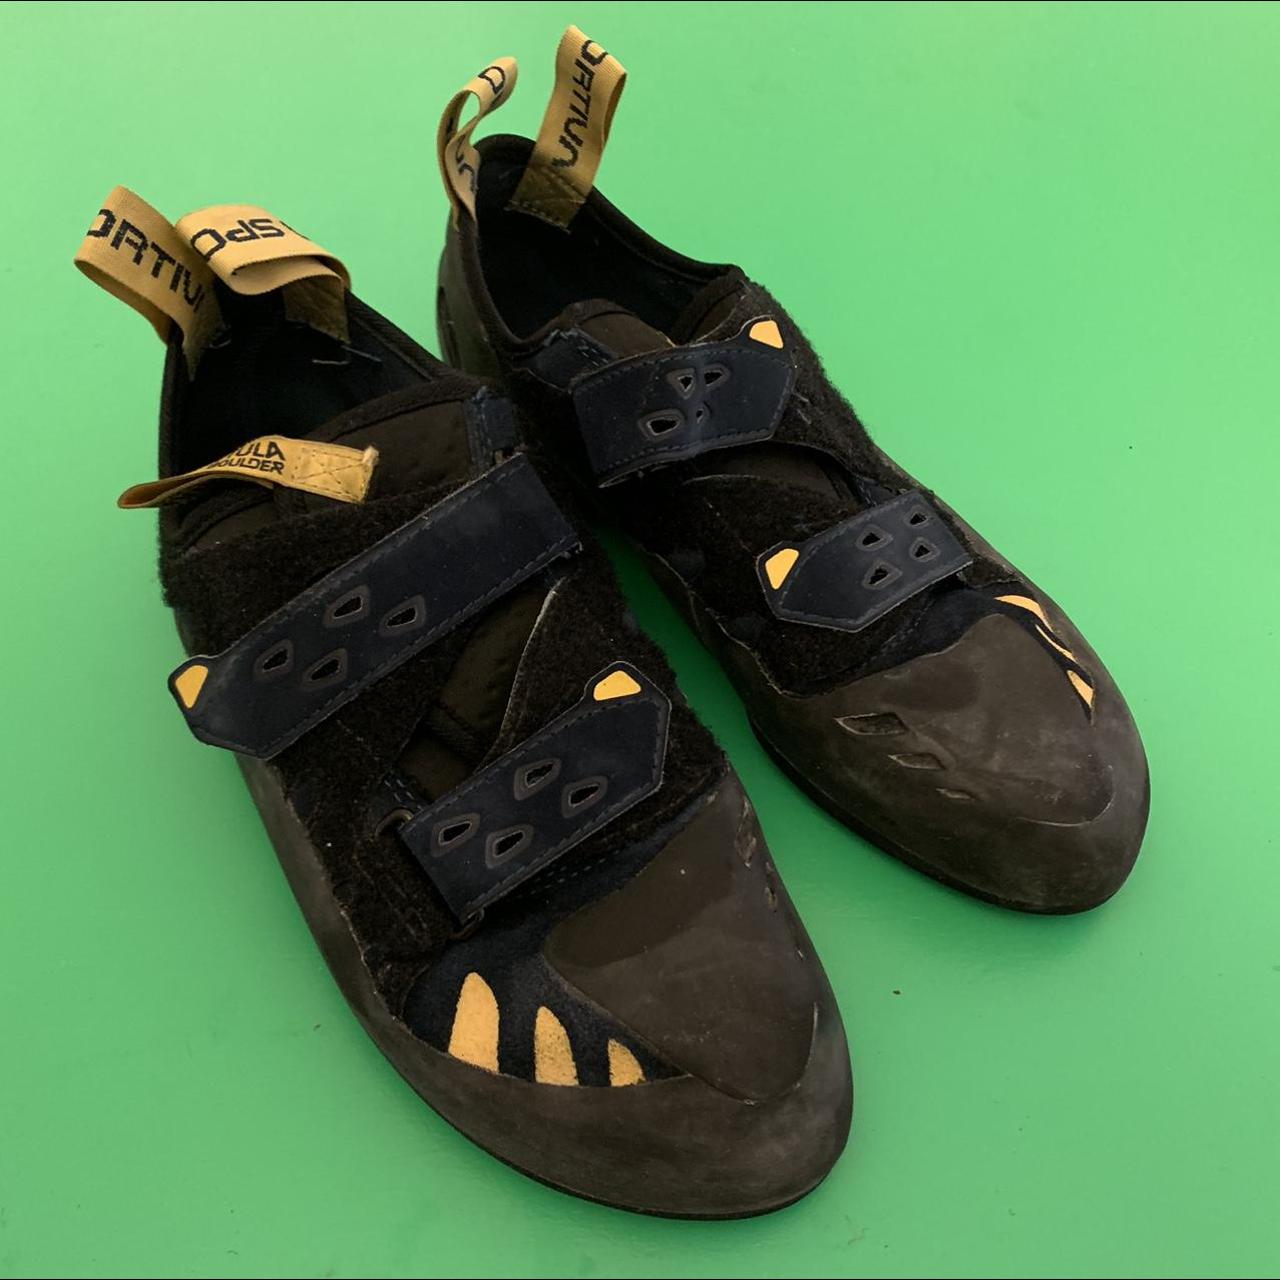 La Sportiva Tarantula climbing shoes Size 8 UK Size... - Depop